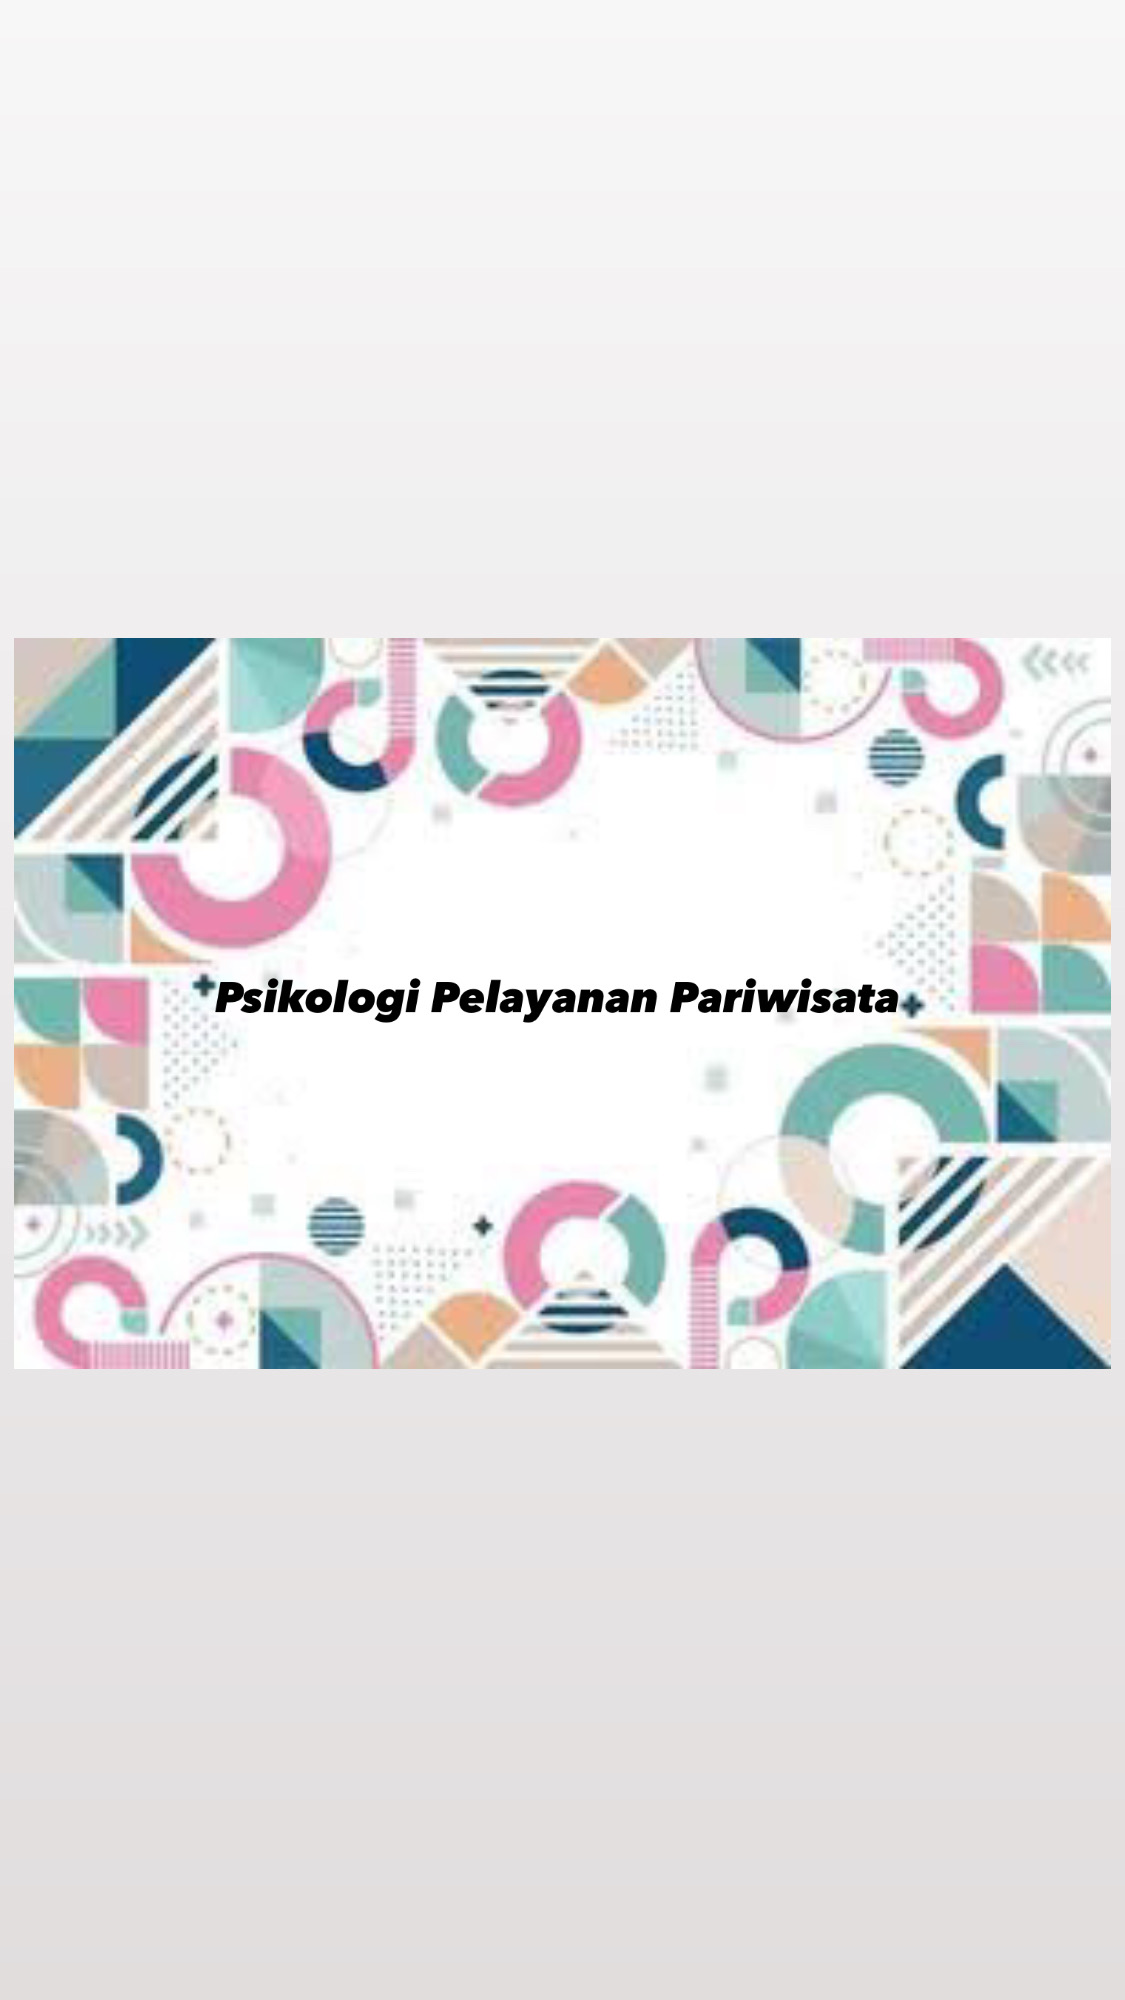 Psikologi Pariwisata & Pelayanan_B_SMT 3_20211